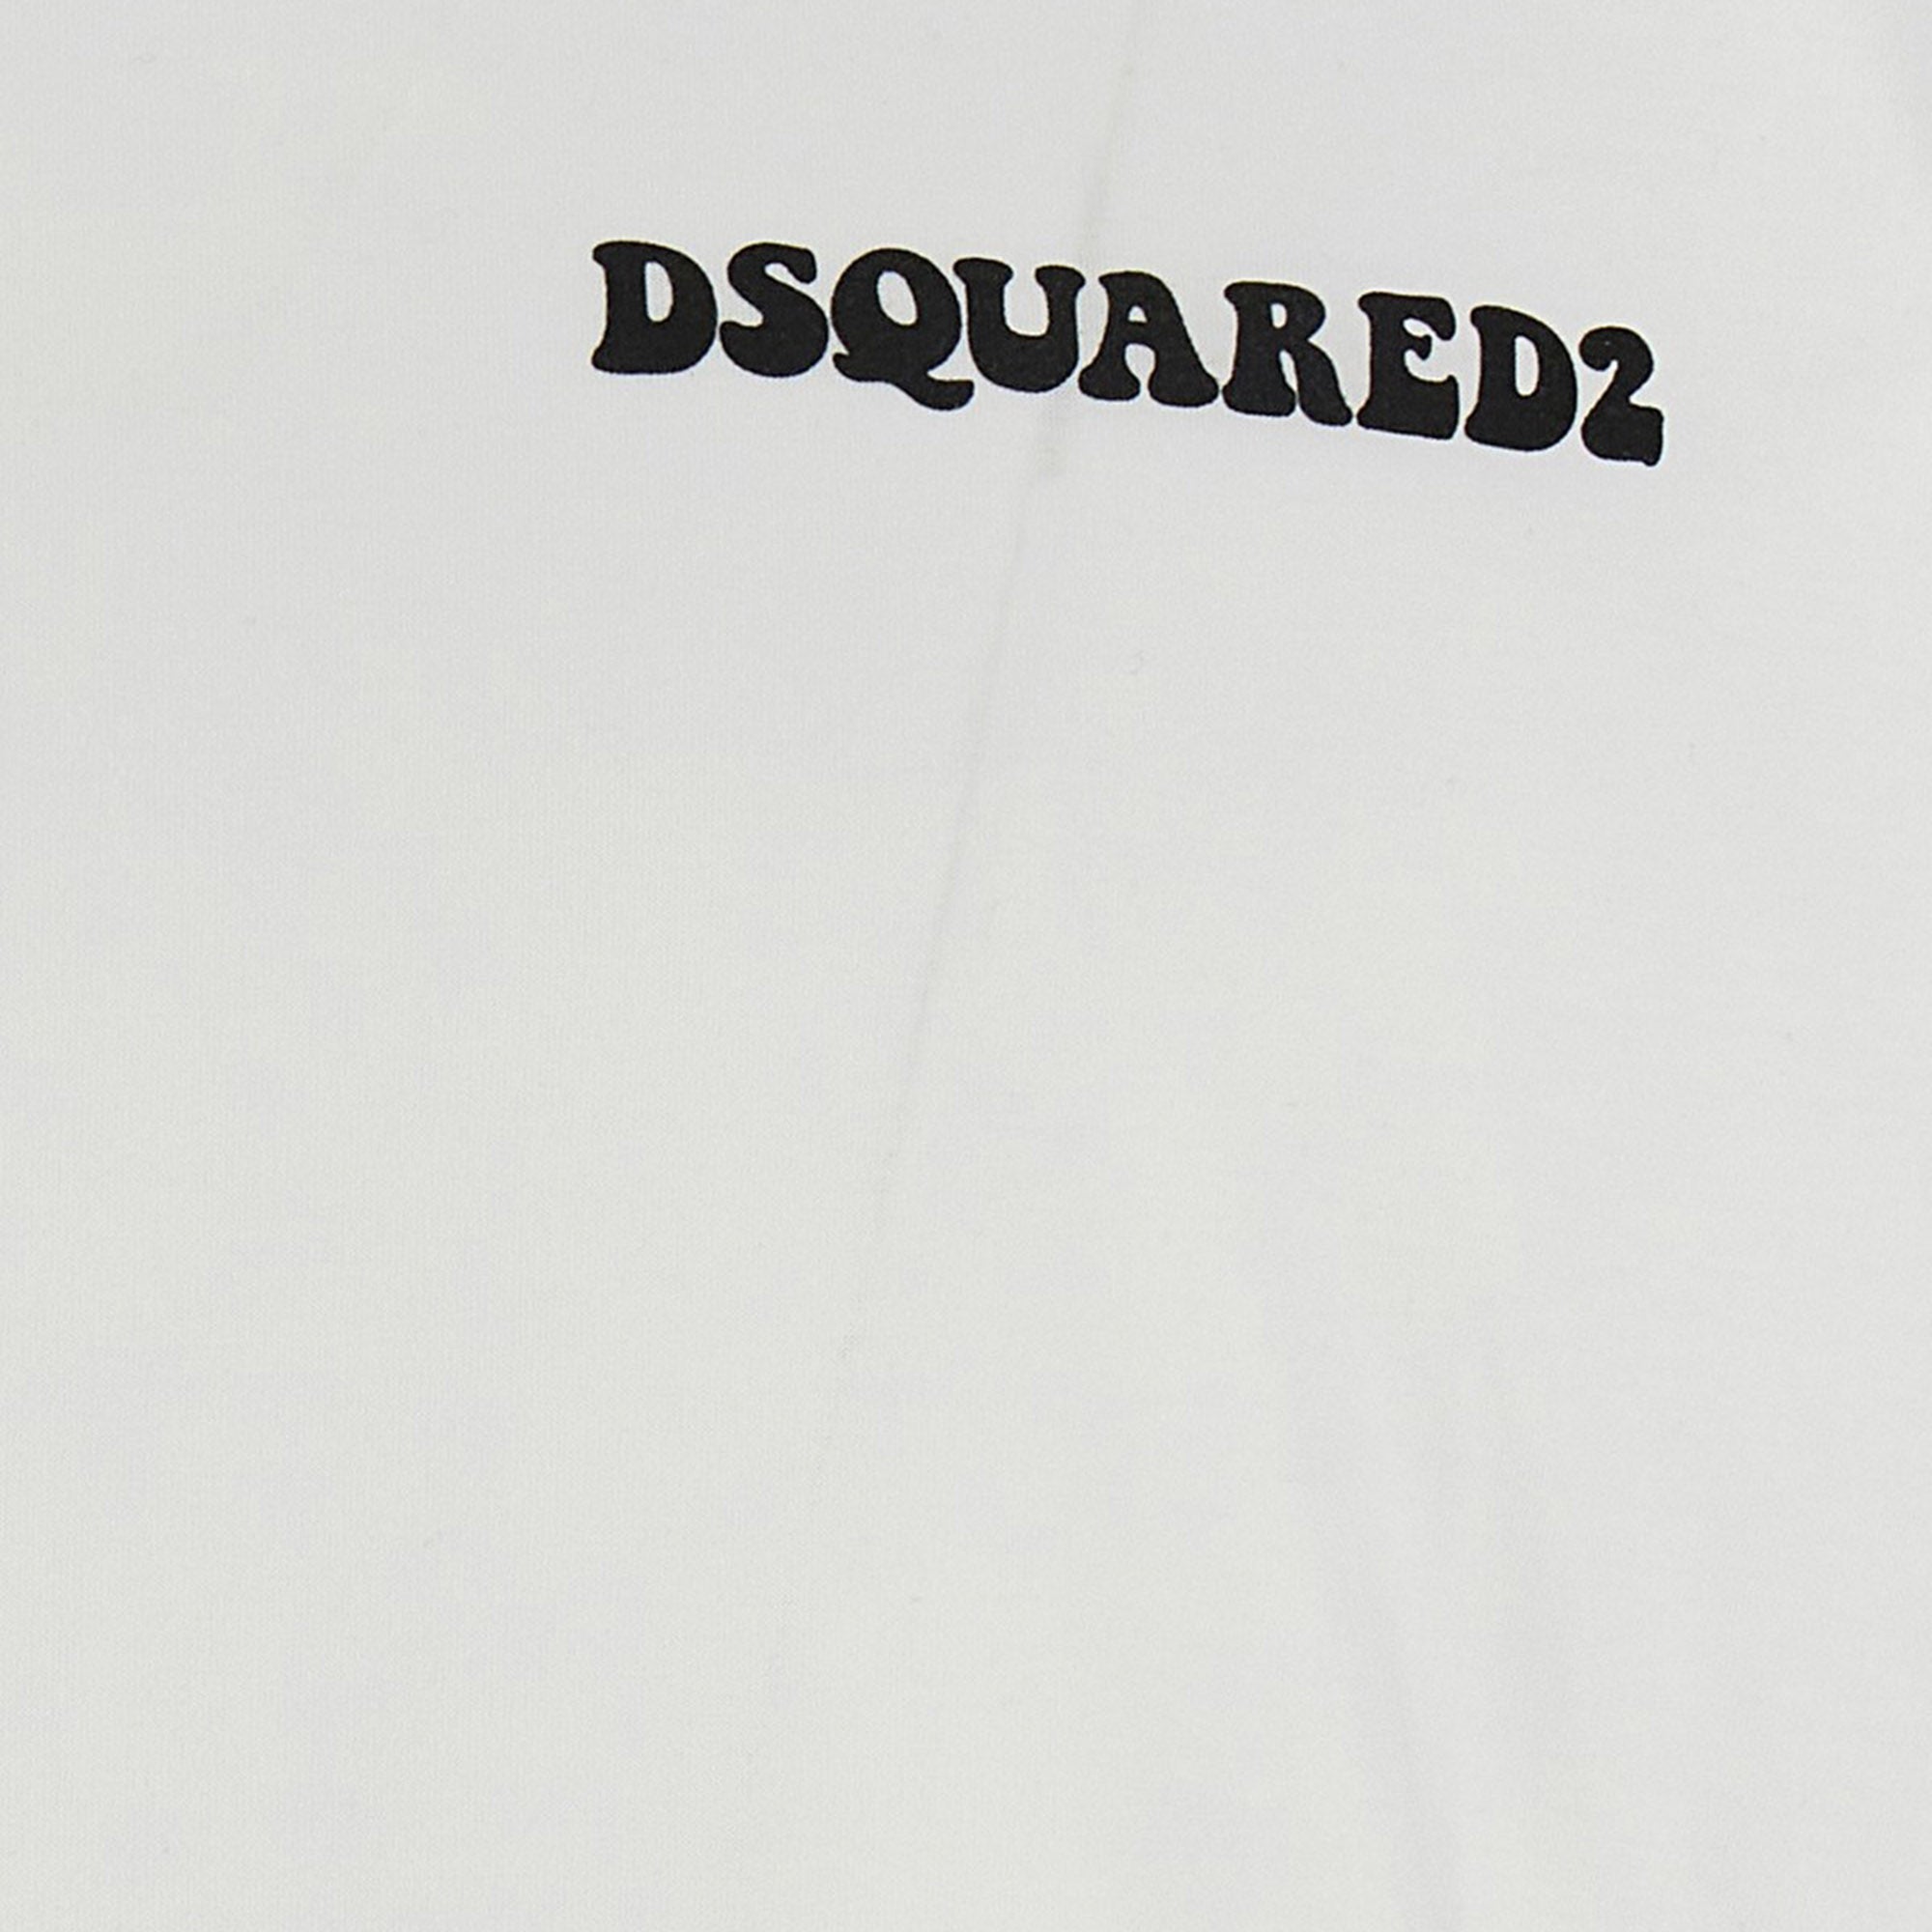 Dsquared2 Mens Cool T-shirt White XL